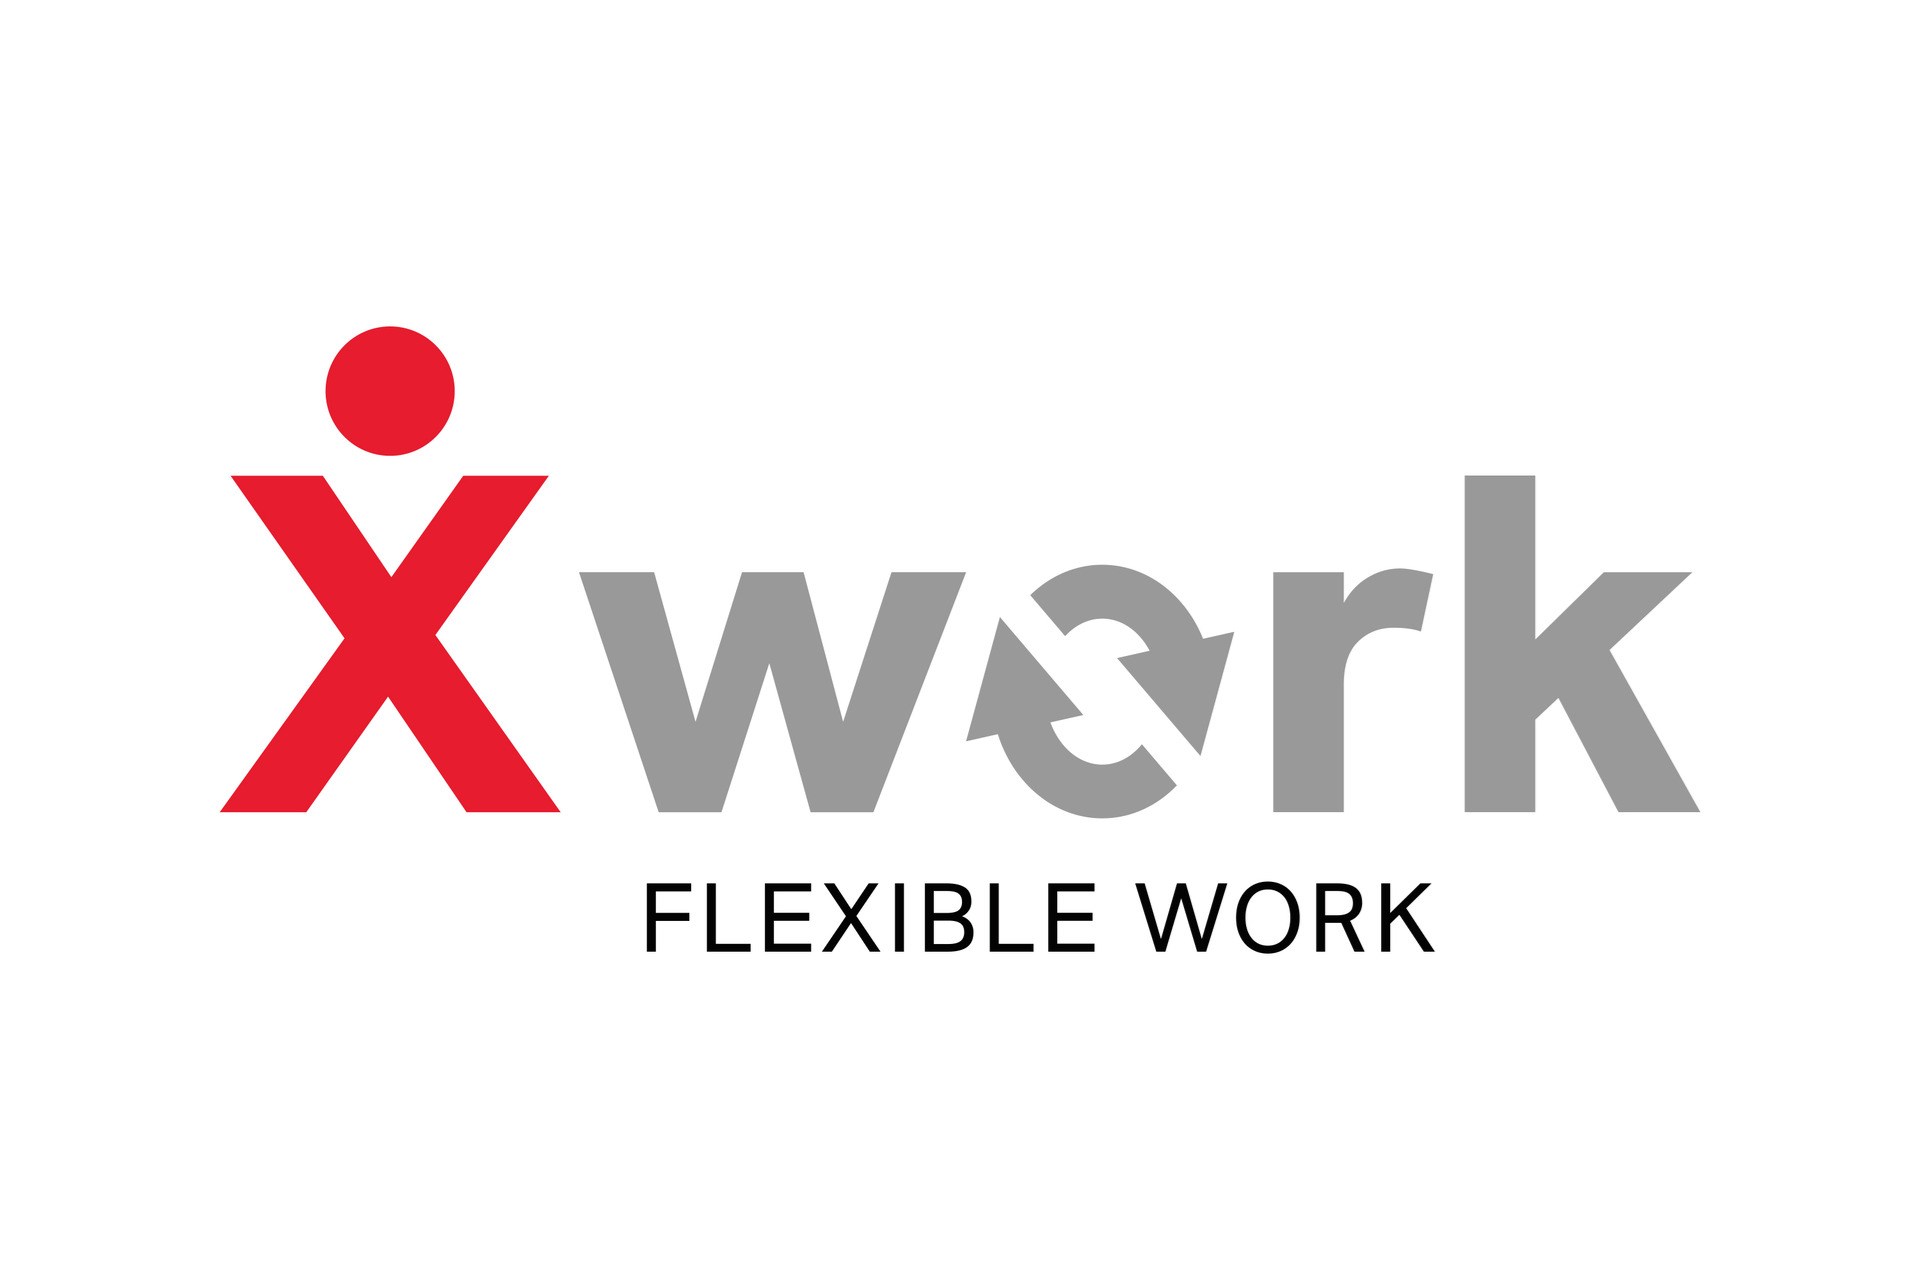 X work Logo 1:1 English